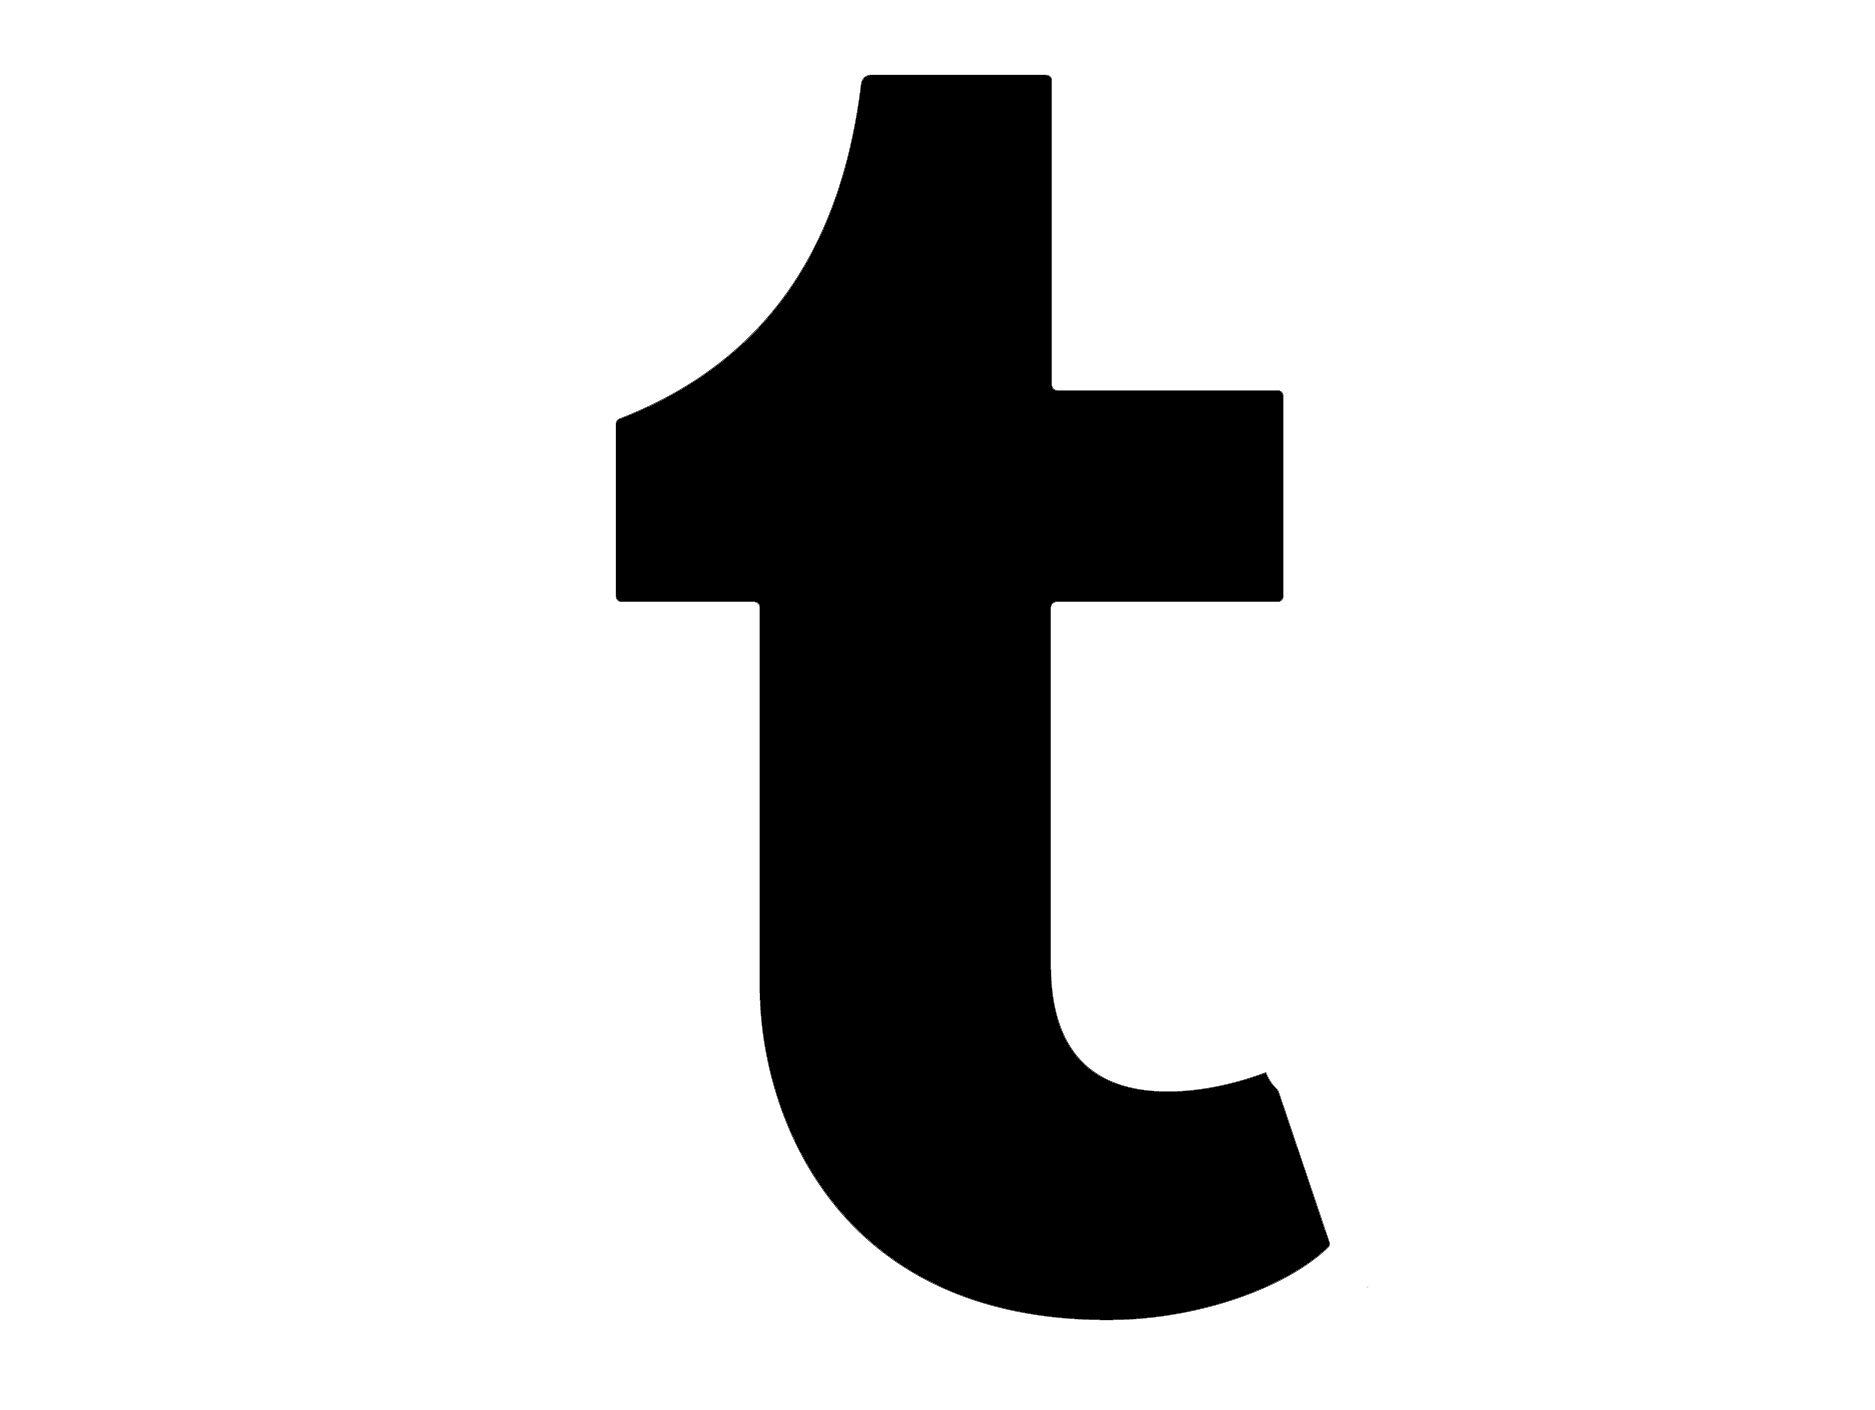 Tumbler Logo - Tumblr Logo, Tumblr Symbol, Meaning, History and Evolution